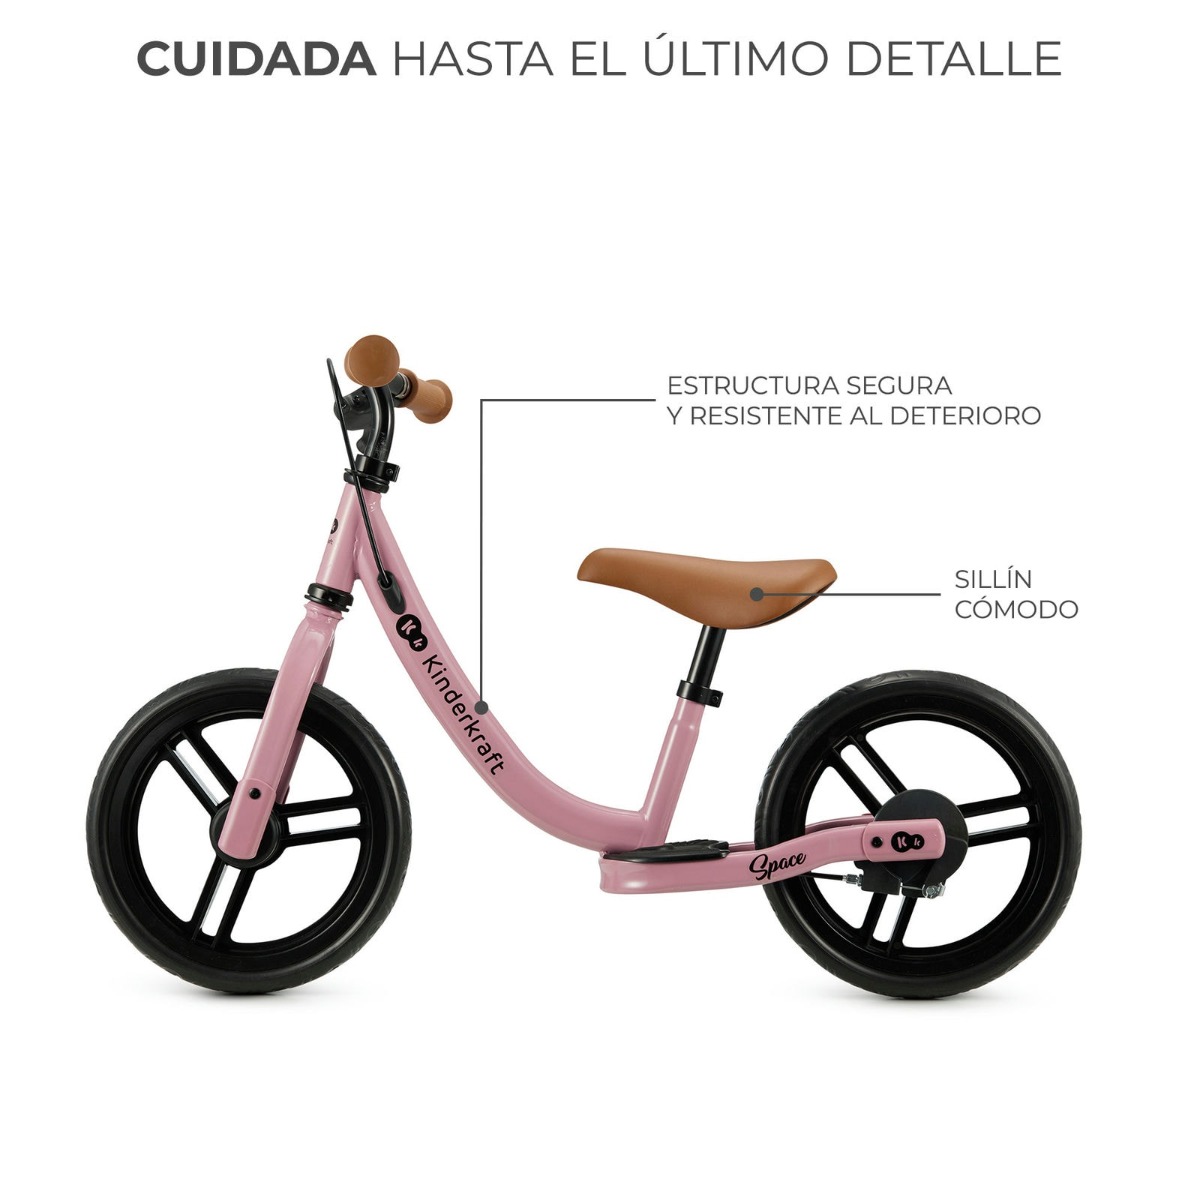 Bicicleta de equilibrio SPACE rosa